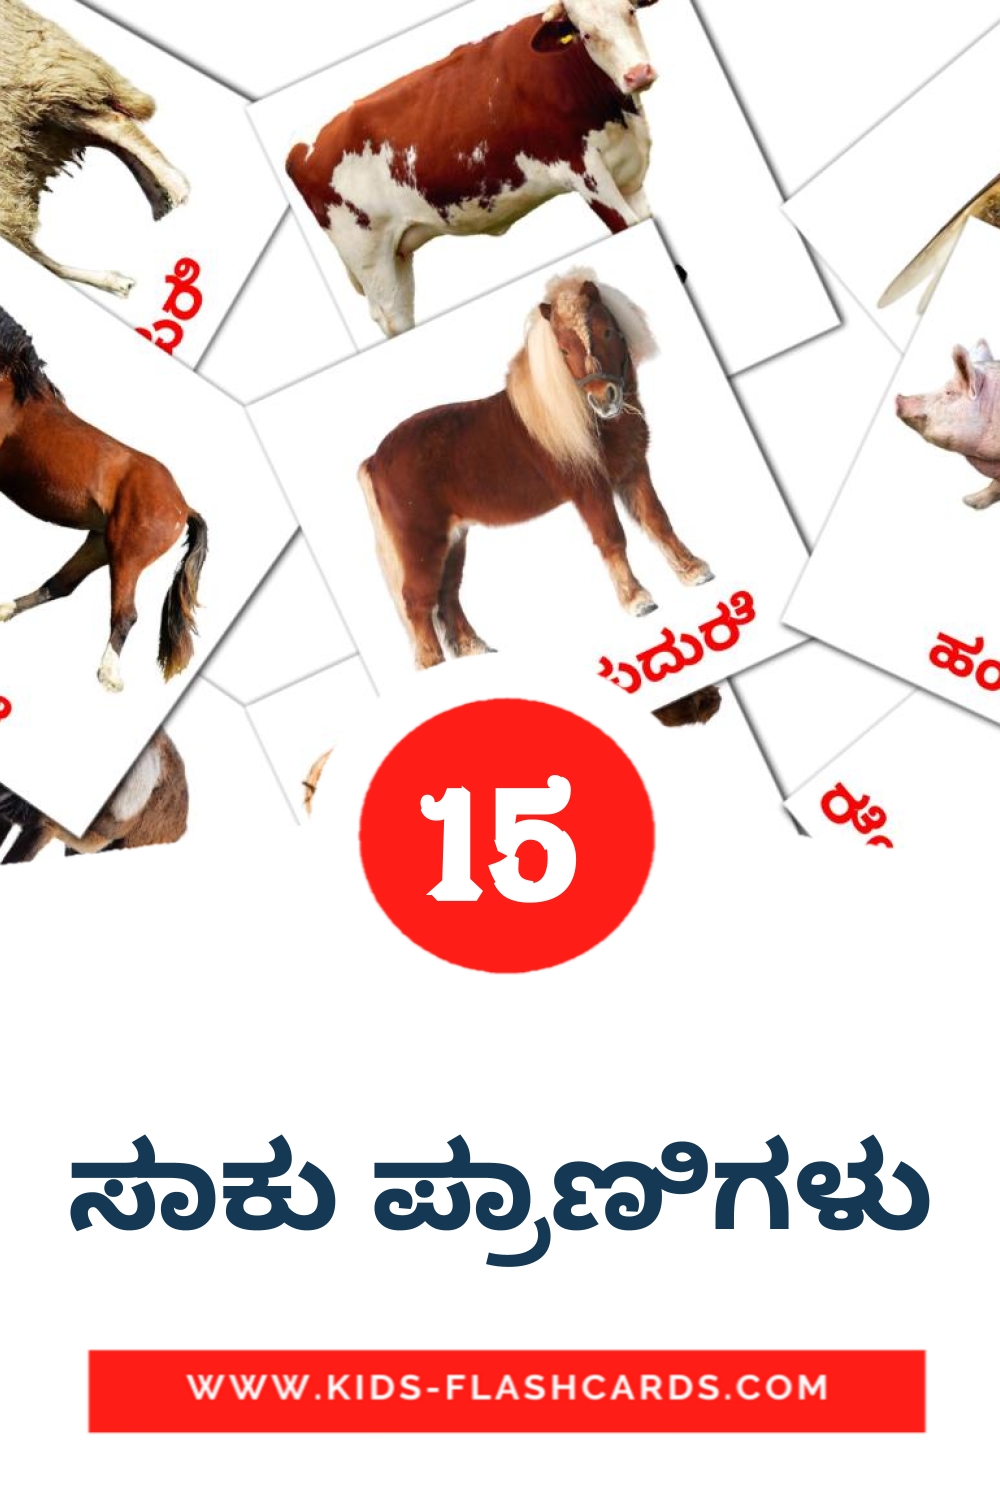 15 ಸಾಕು ಪ್ರಾಣಿಗಳು fotokaarten voor kleuters in het kannada